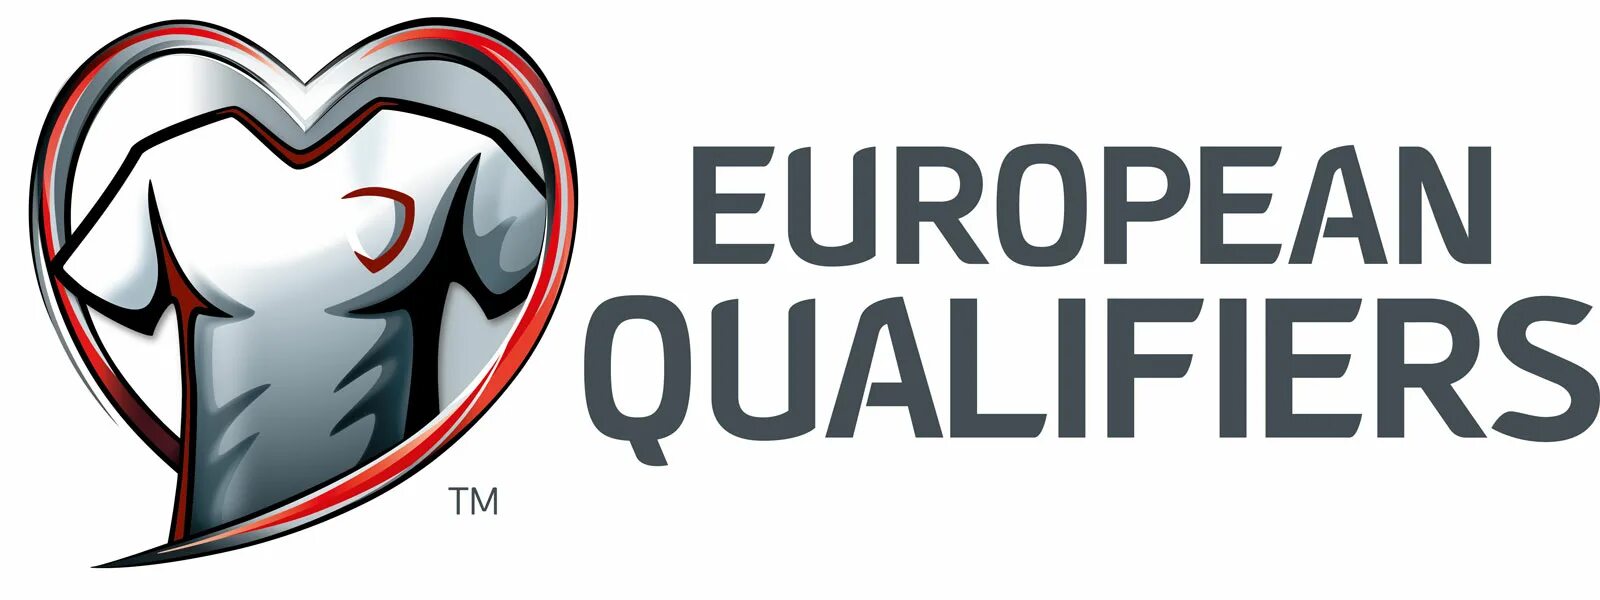 Eu qualifiers. European Qualifiers. European Qualifiers 2016. EC Qualifiers что это. European Qualifiers мяс.